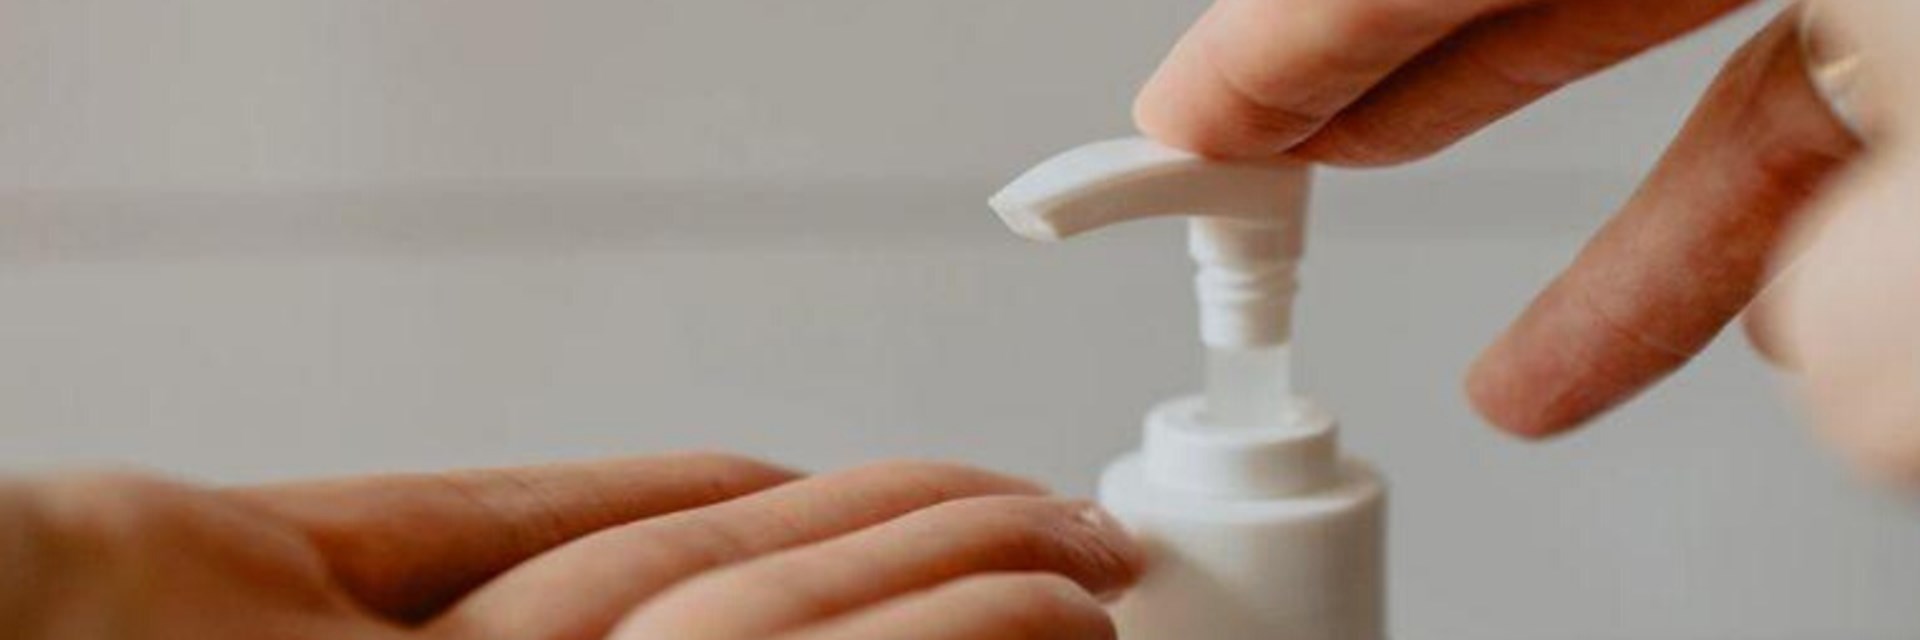 Hand Sanitiser Myths